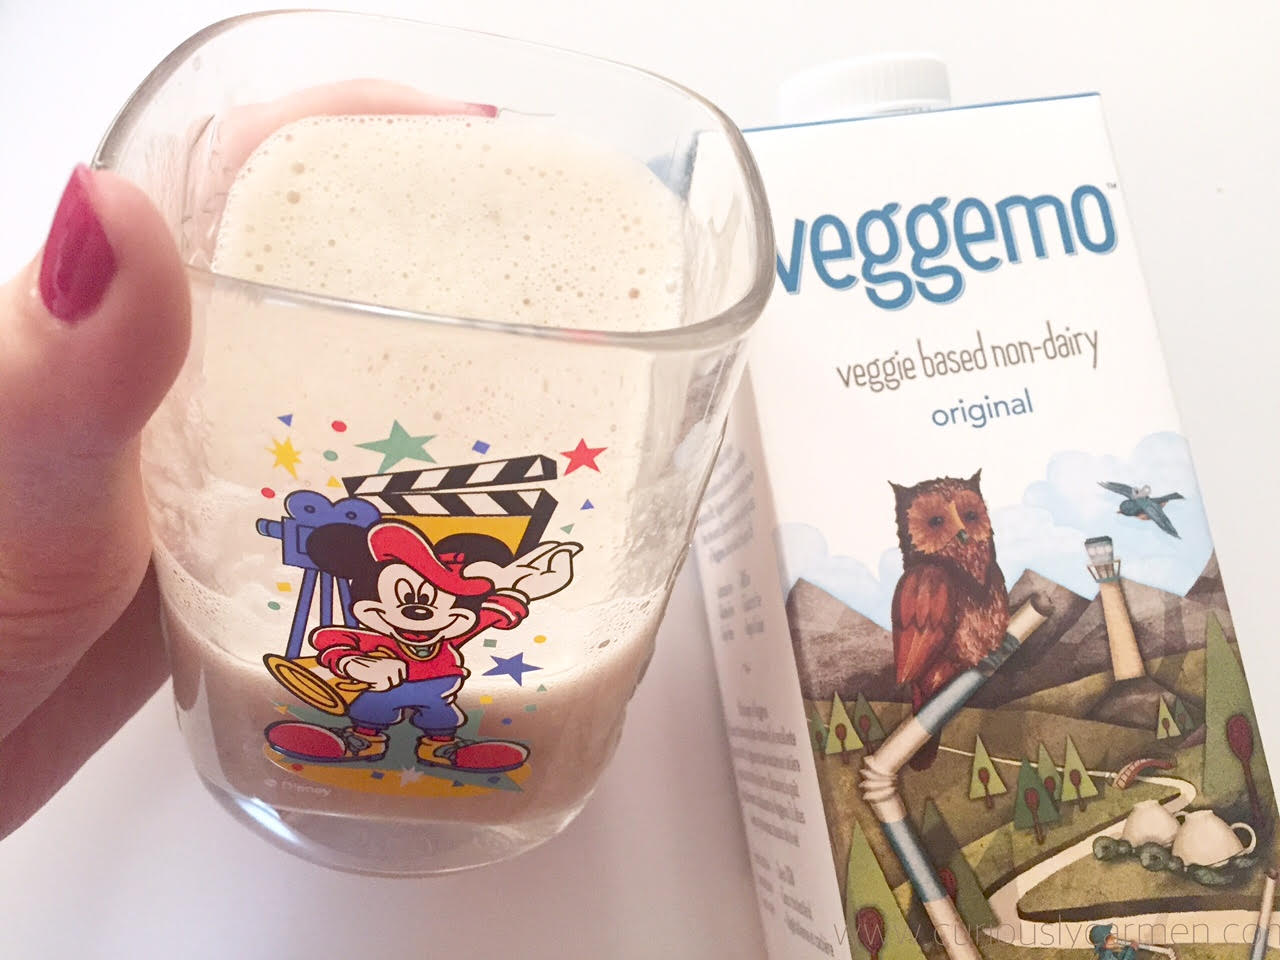 Veggemo Vegan Plant Based, Non-Dairy Beverage